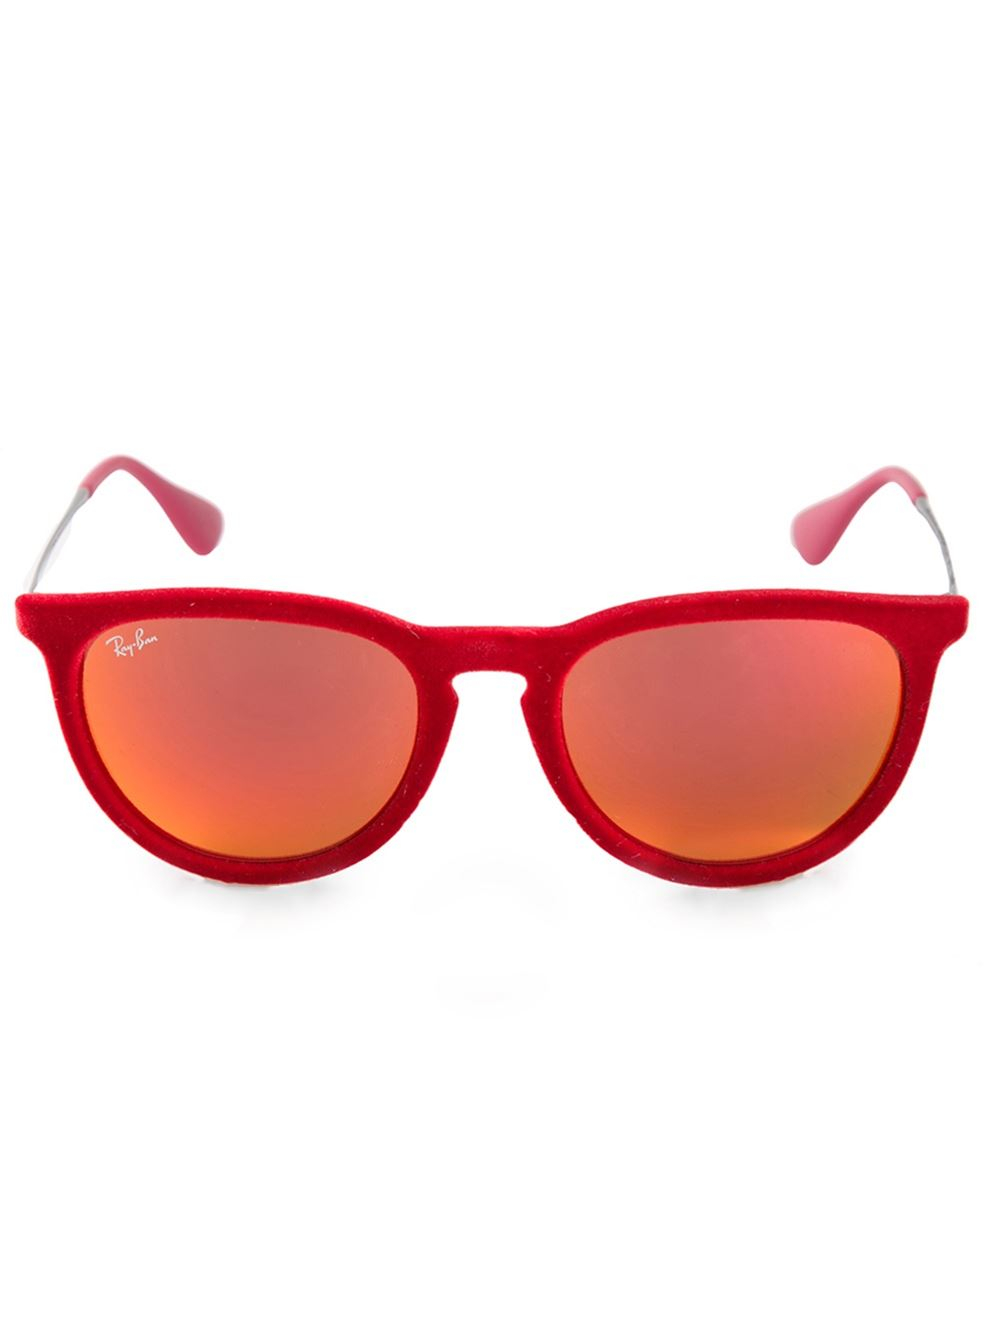 China sunglasses men ray ban polarized wholesale